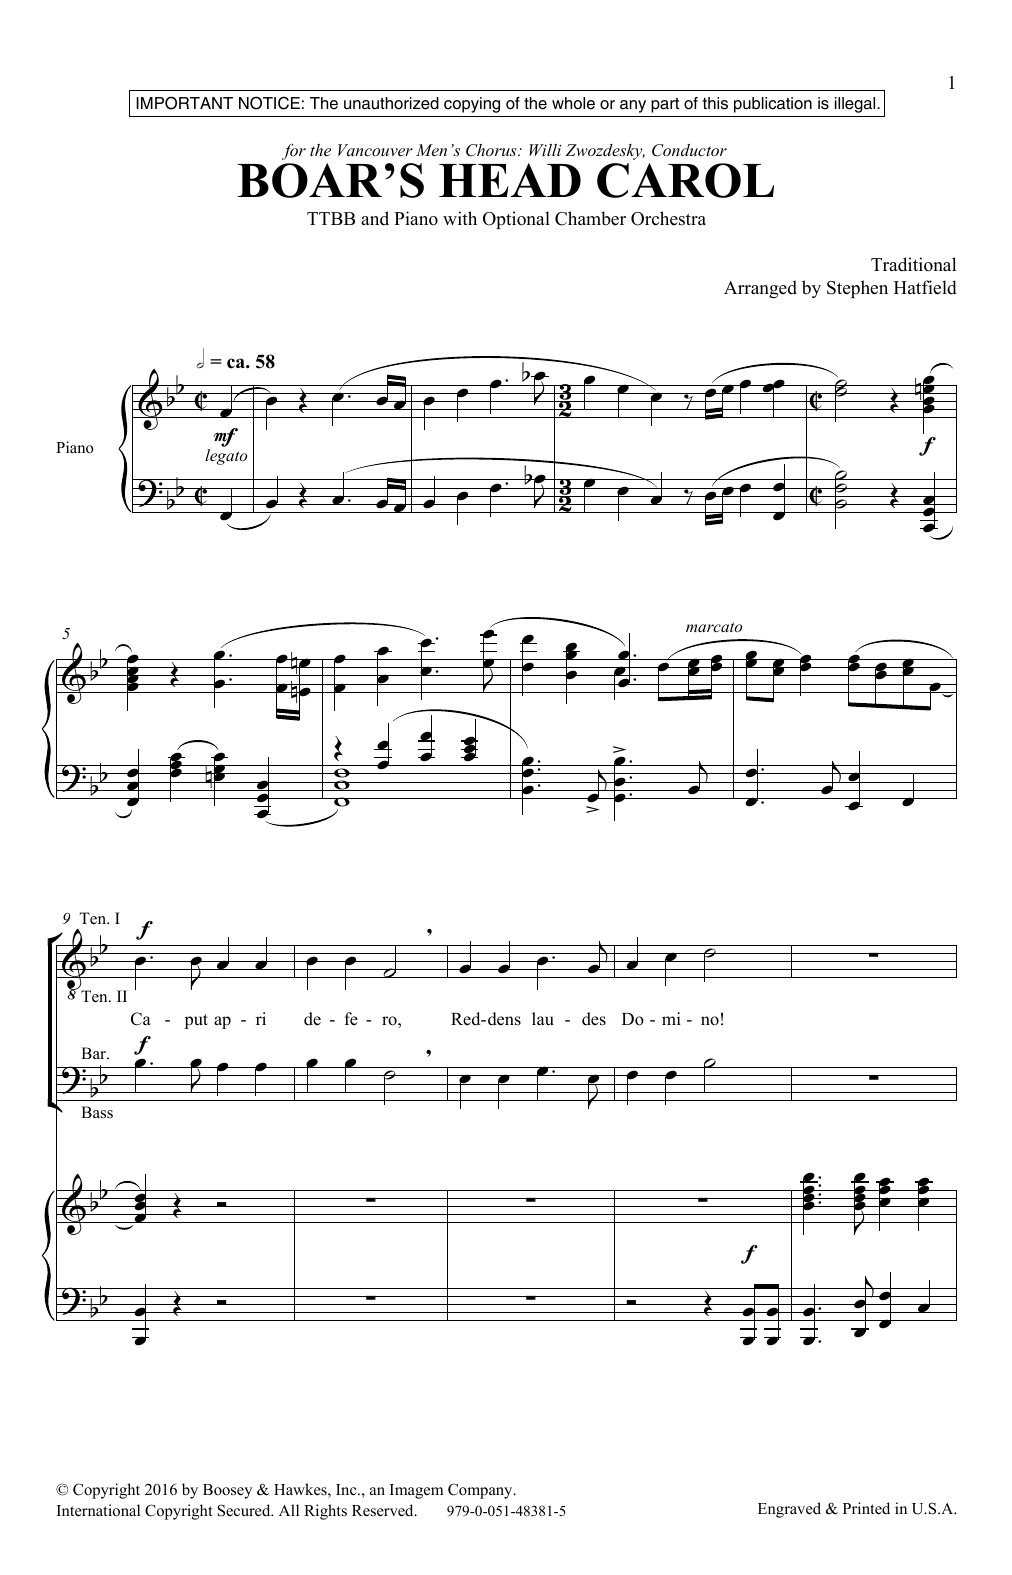 Stephen Hatfield The Boar's Head Carol Sheet Music Notes & Chords for TTBB - Download or Print PDF